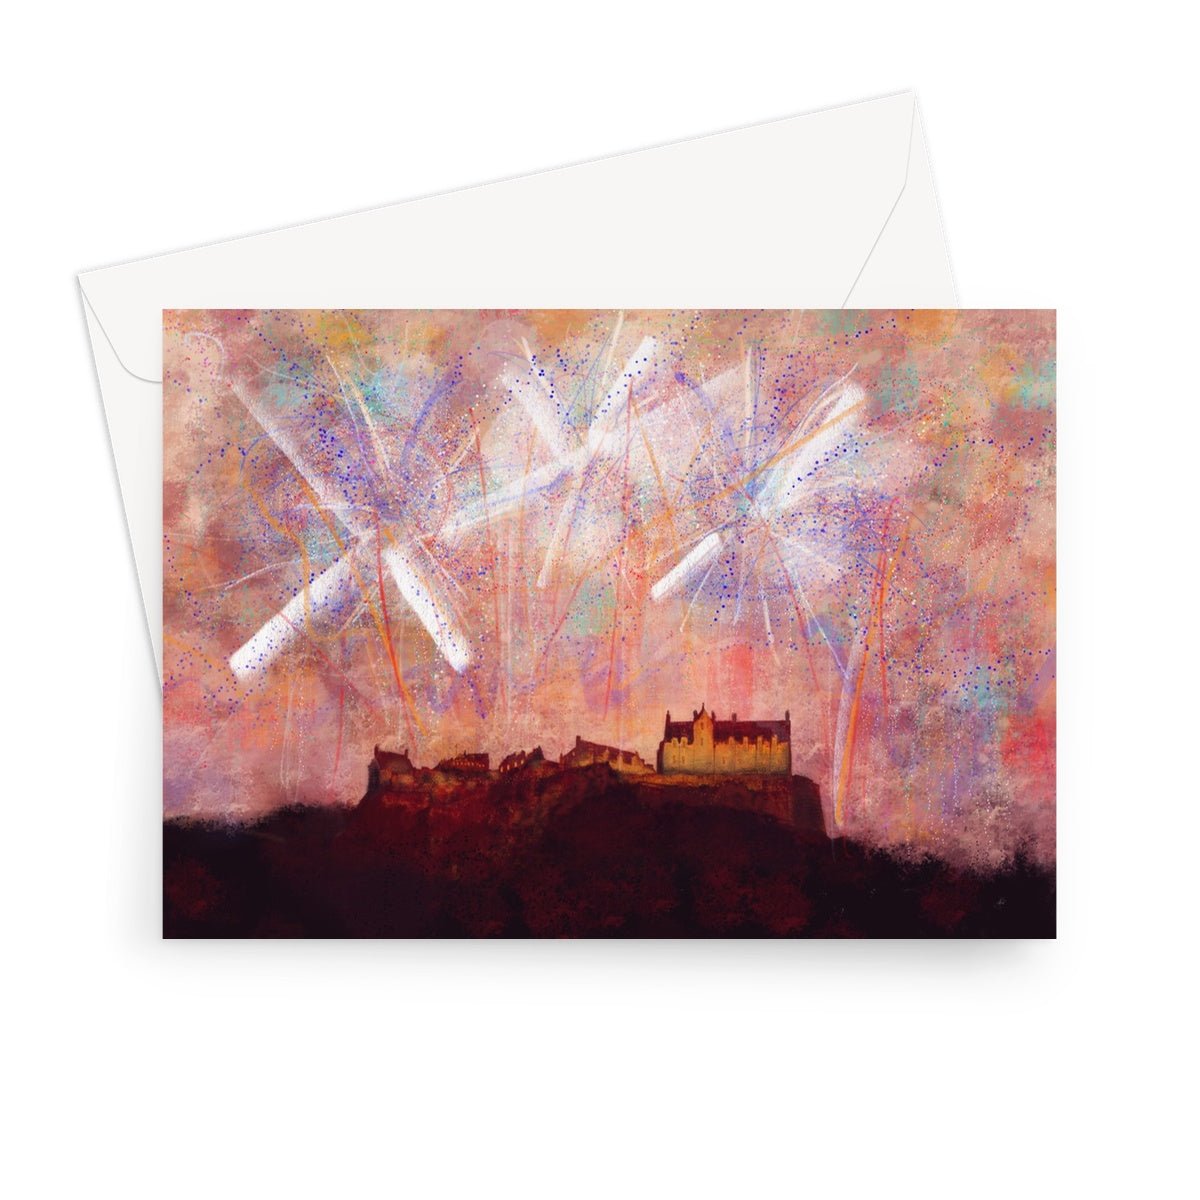 Edinburgh Castle Fireworks Art Gifts Greeting Card-Greetings Cards-Edinburgh & Glasgow Art Gallery-7"x5"-10 Cards-Paintings, Prints, Homeware, Art Gifts From Scotland By Scottish Artist Kevin Hunter